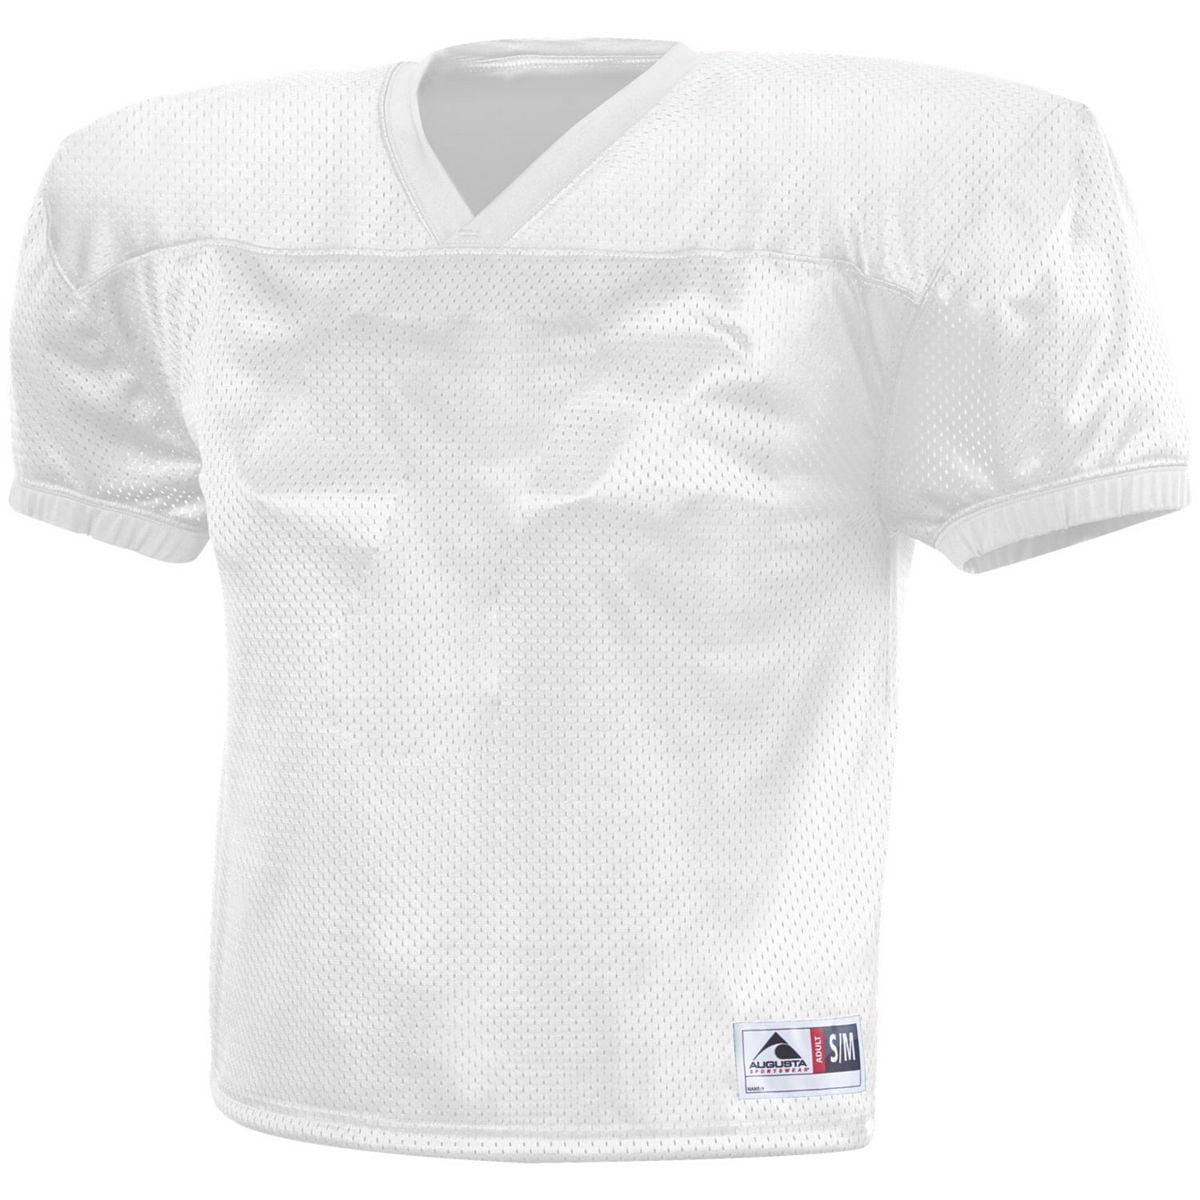 white practice jersey